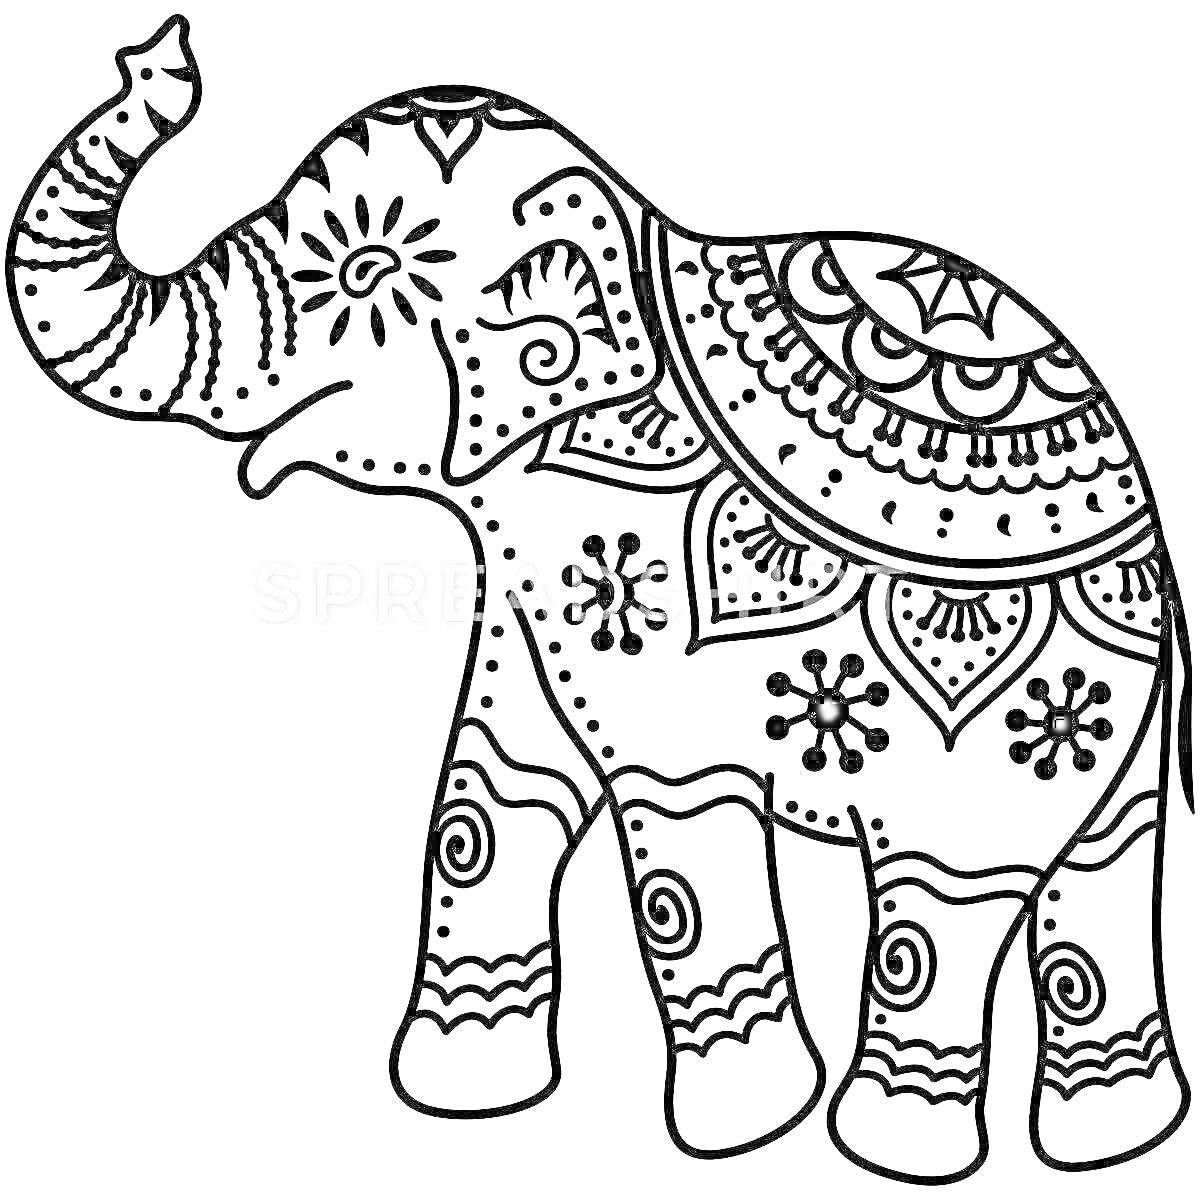 Раскраска Индийский слон с орнаментом, украшениями и узорами на теле